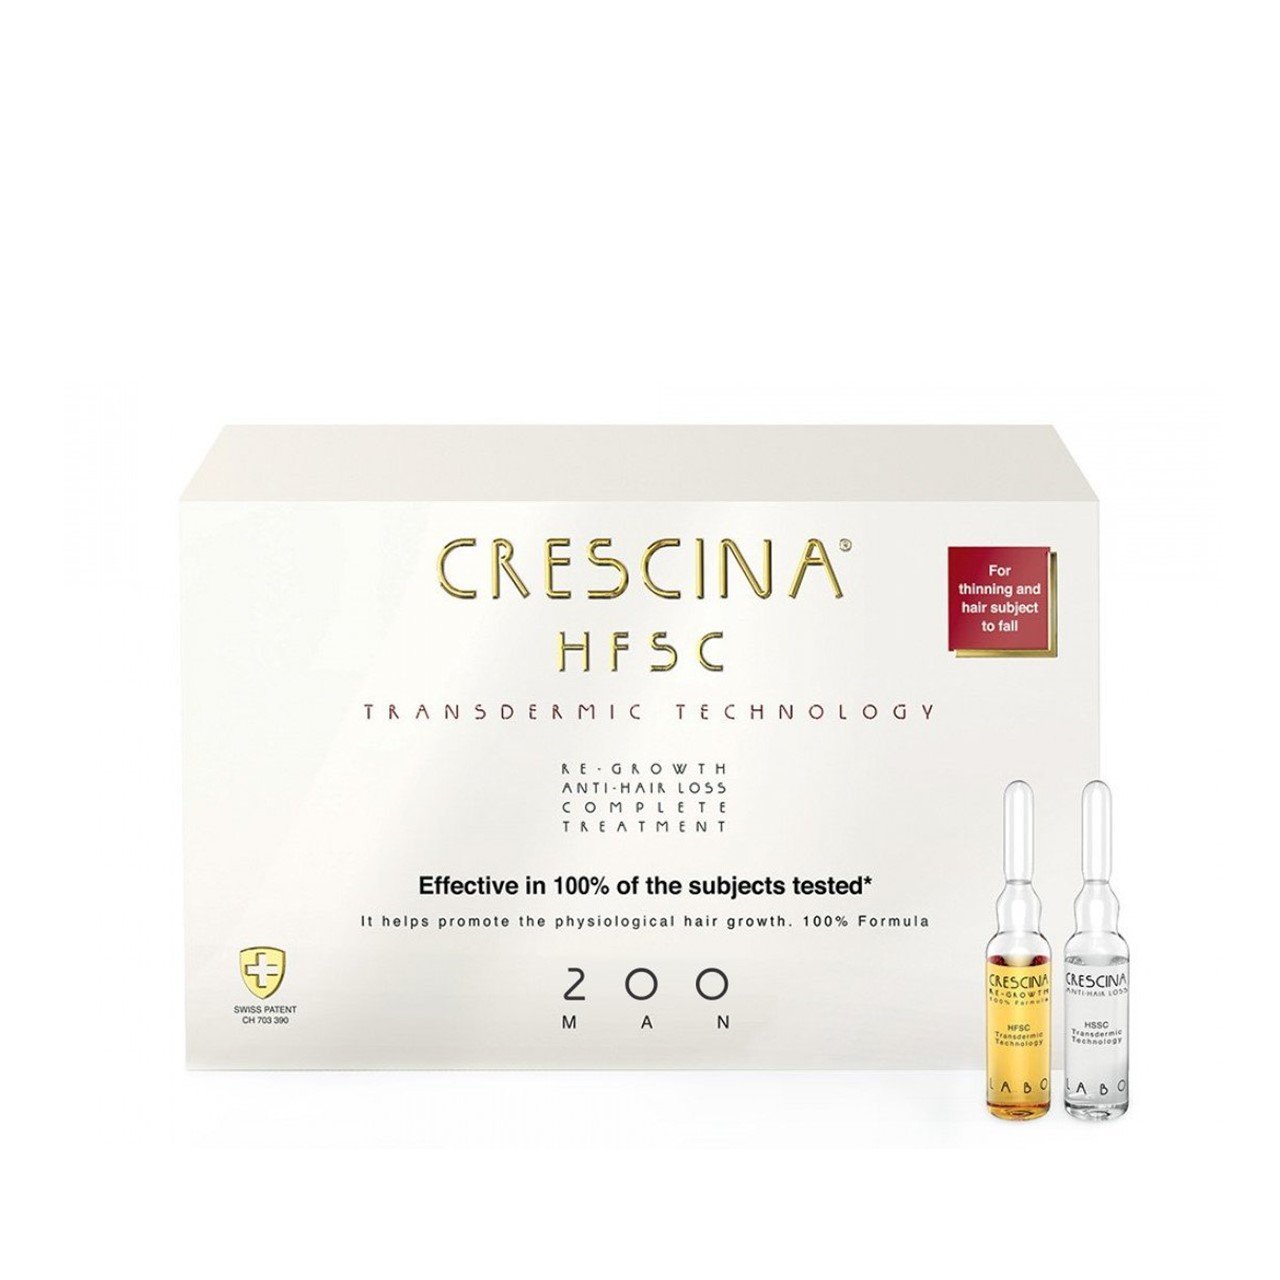 Crescina HFSC Transdermic Treatment 200 Man Ampoules 3.5ml x10+10 (10+10x0.12fl oz)